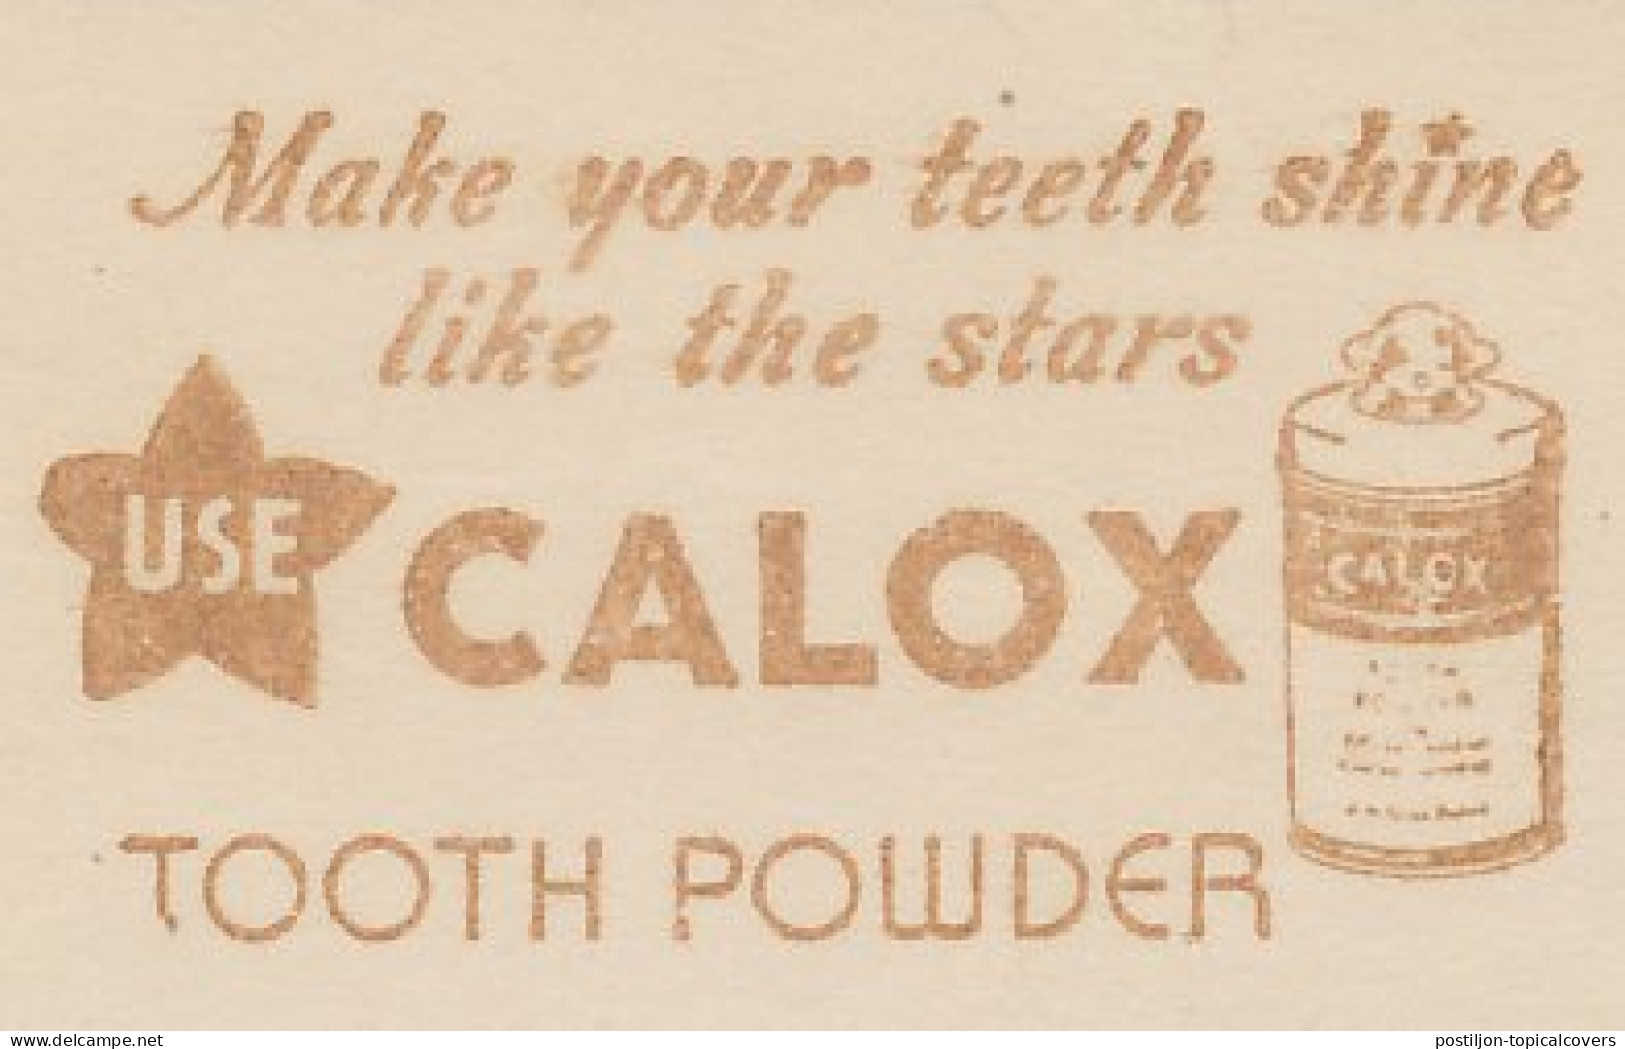 Meter Cut USA Tooth Powder - Calox - Medicine